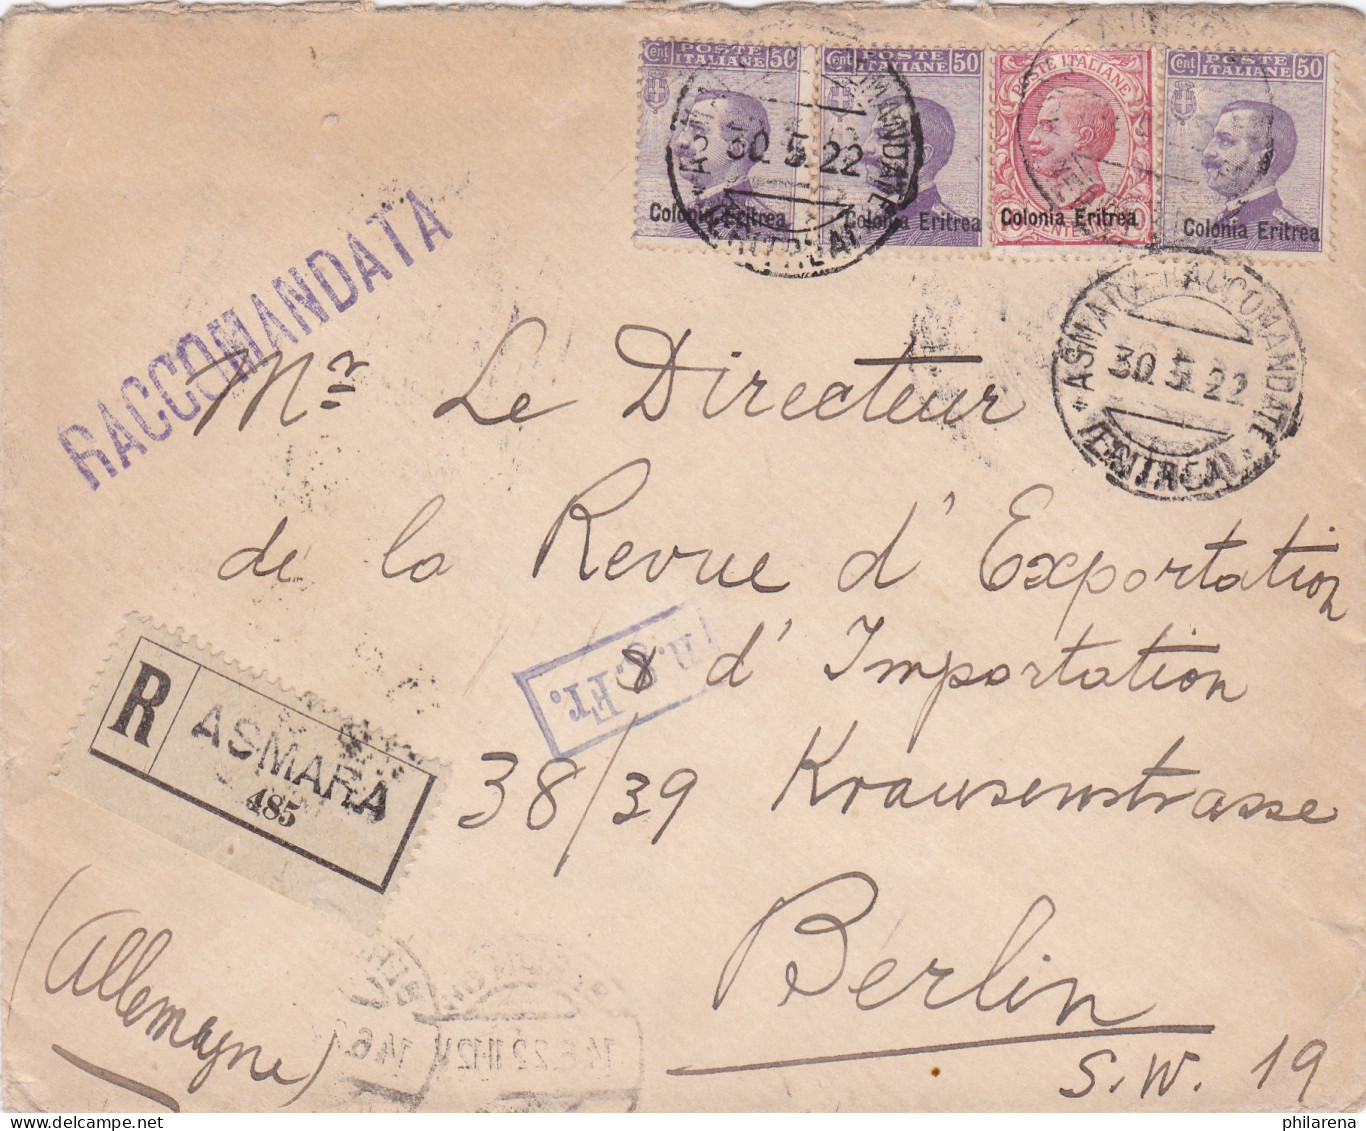 1922: Registered Letter From Asmara-Eritrea To Berlin (Italy) - Erythrée